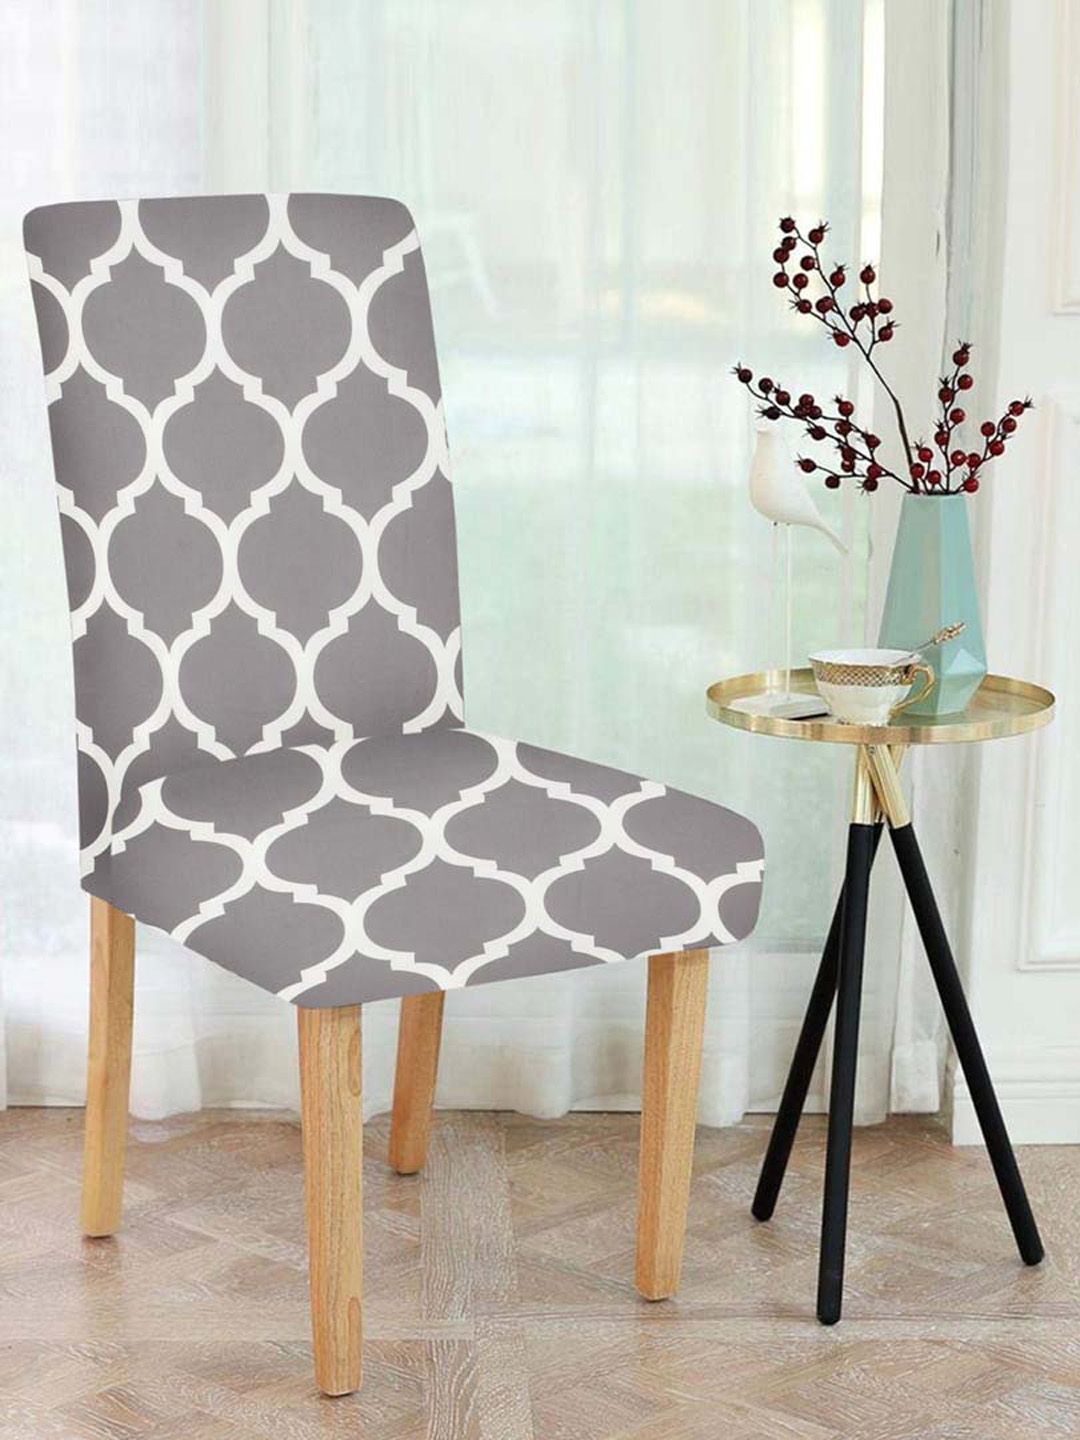 Slushy Mushy Grey & White Set Of 4 Printed Chair Covers Price in India